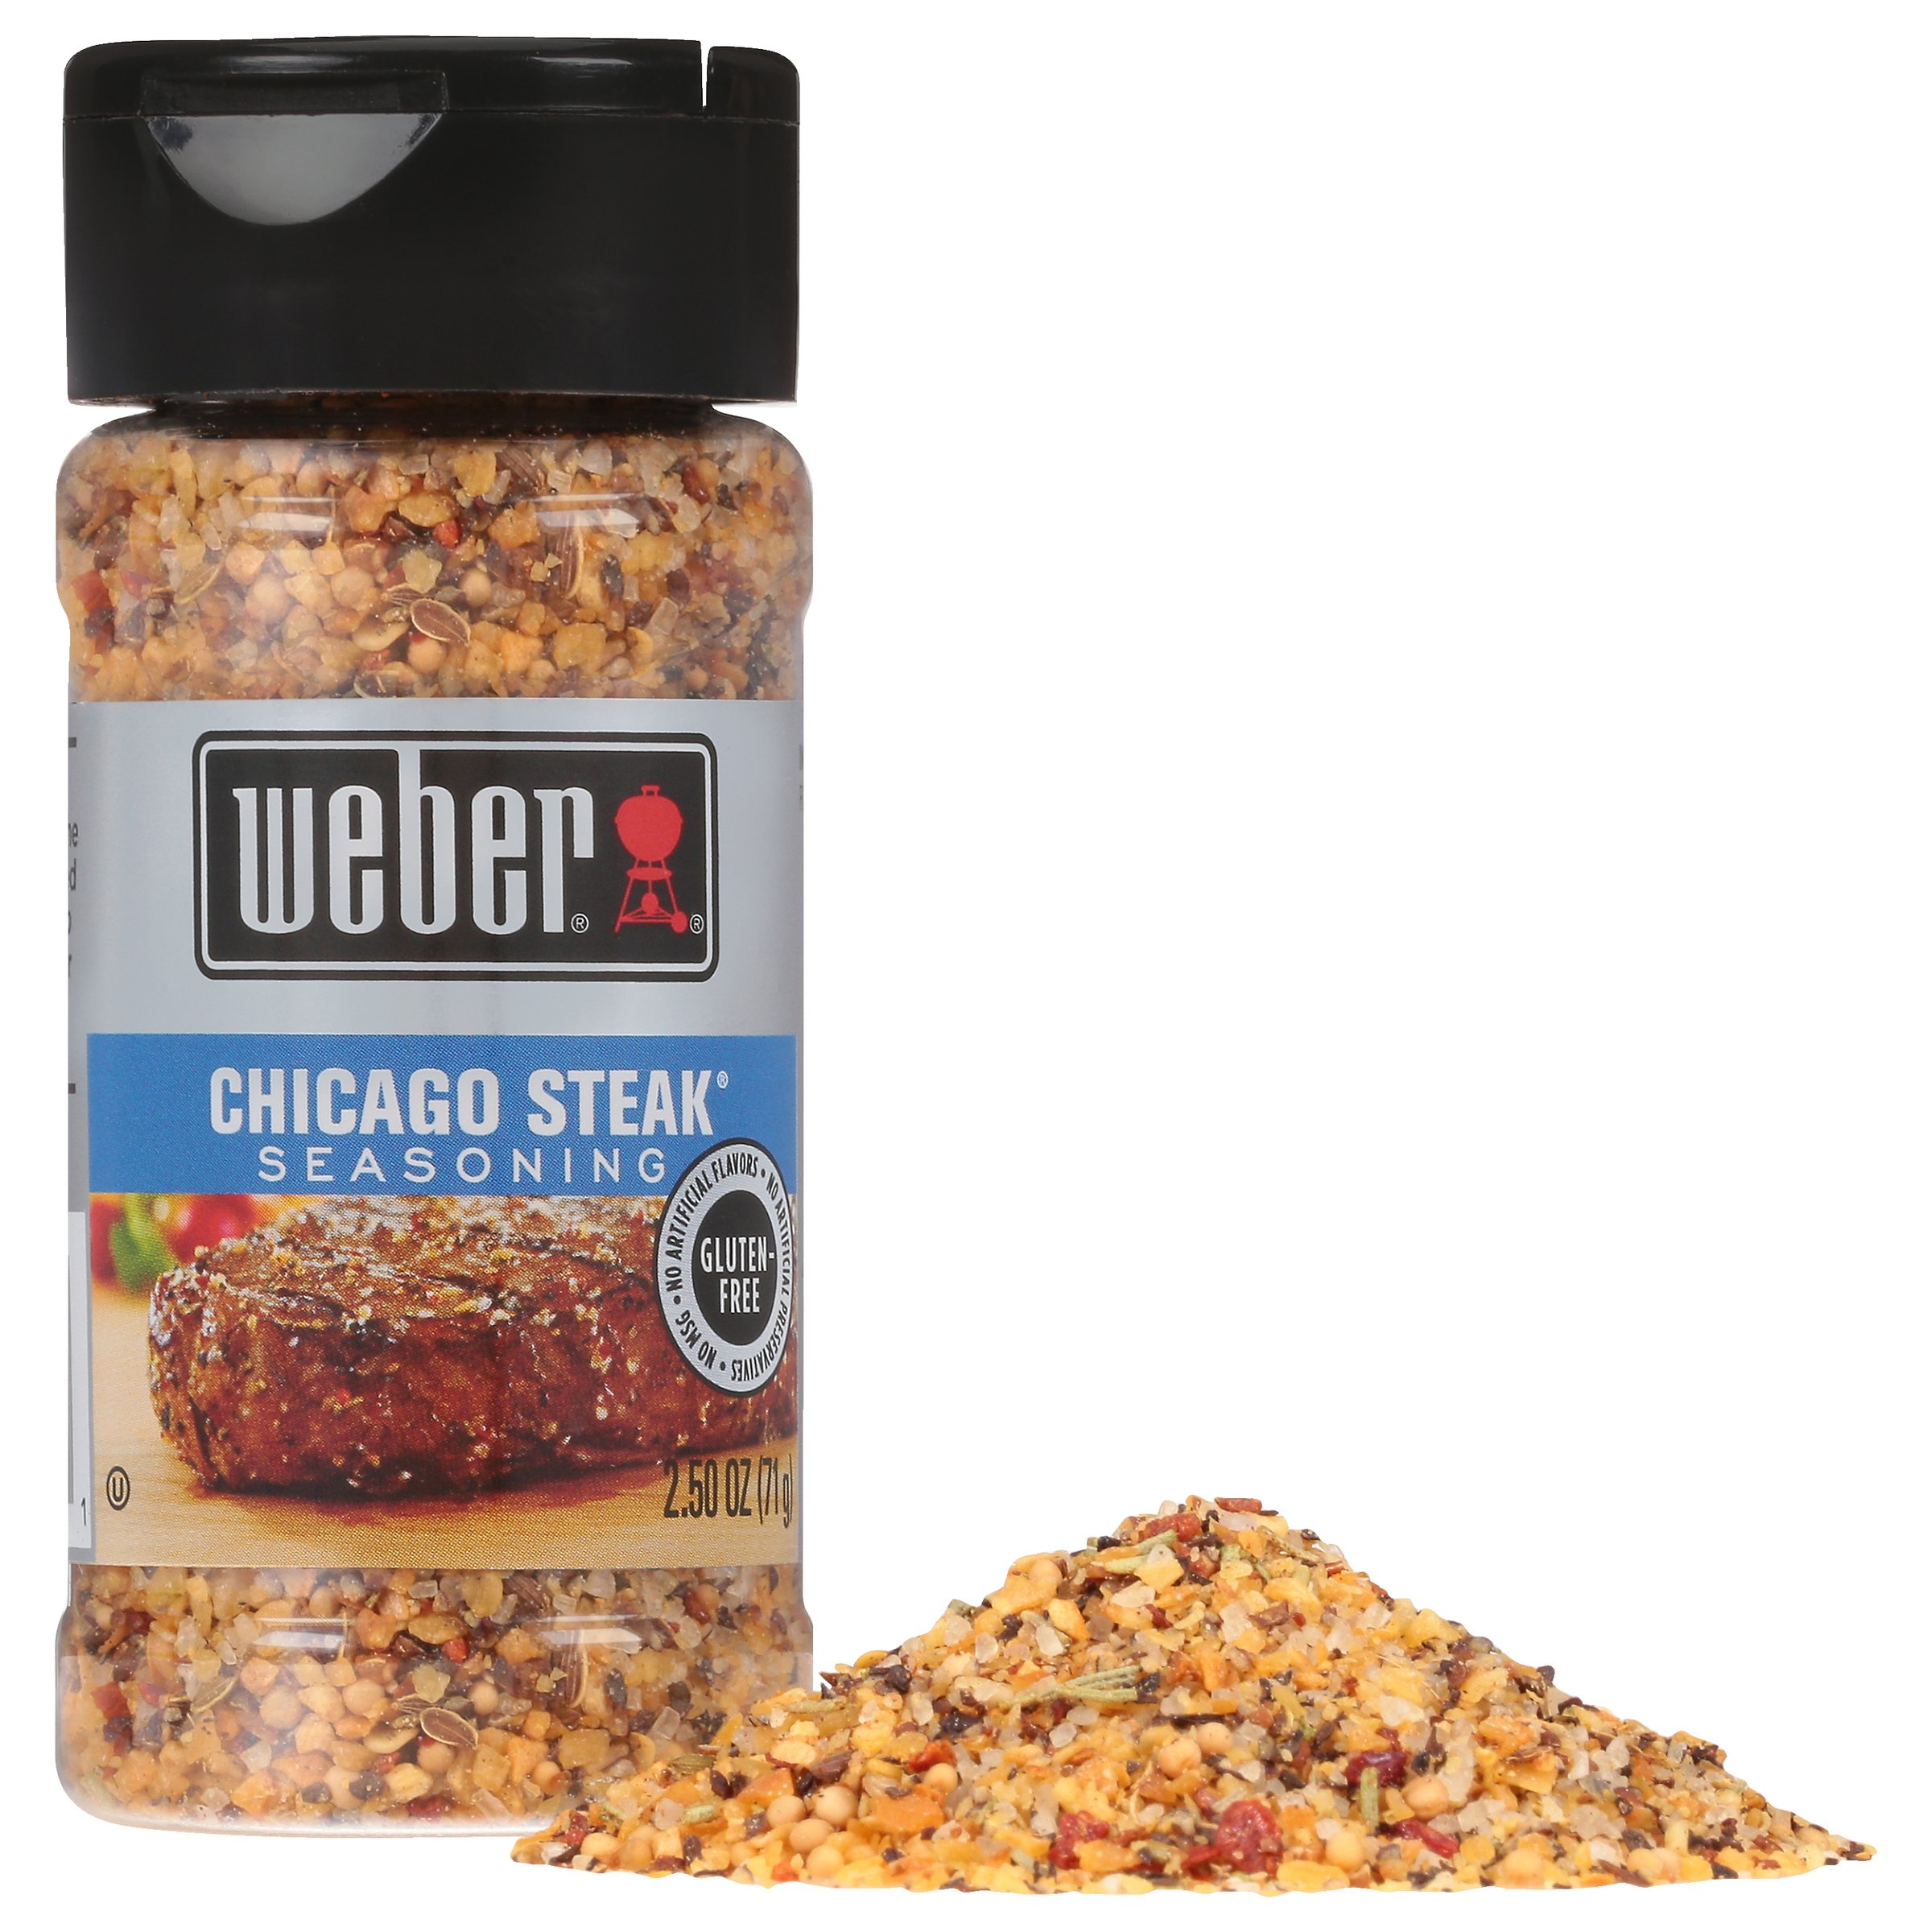 Weber Seasoning Variety 4 Flavor Pack 2.5-2.75 Ounce (Chicago Steak, Roasted Garlic and Herb, Kick'n Chicken, Beer Can Chicken)